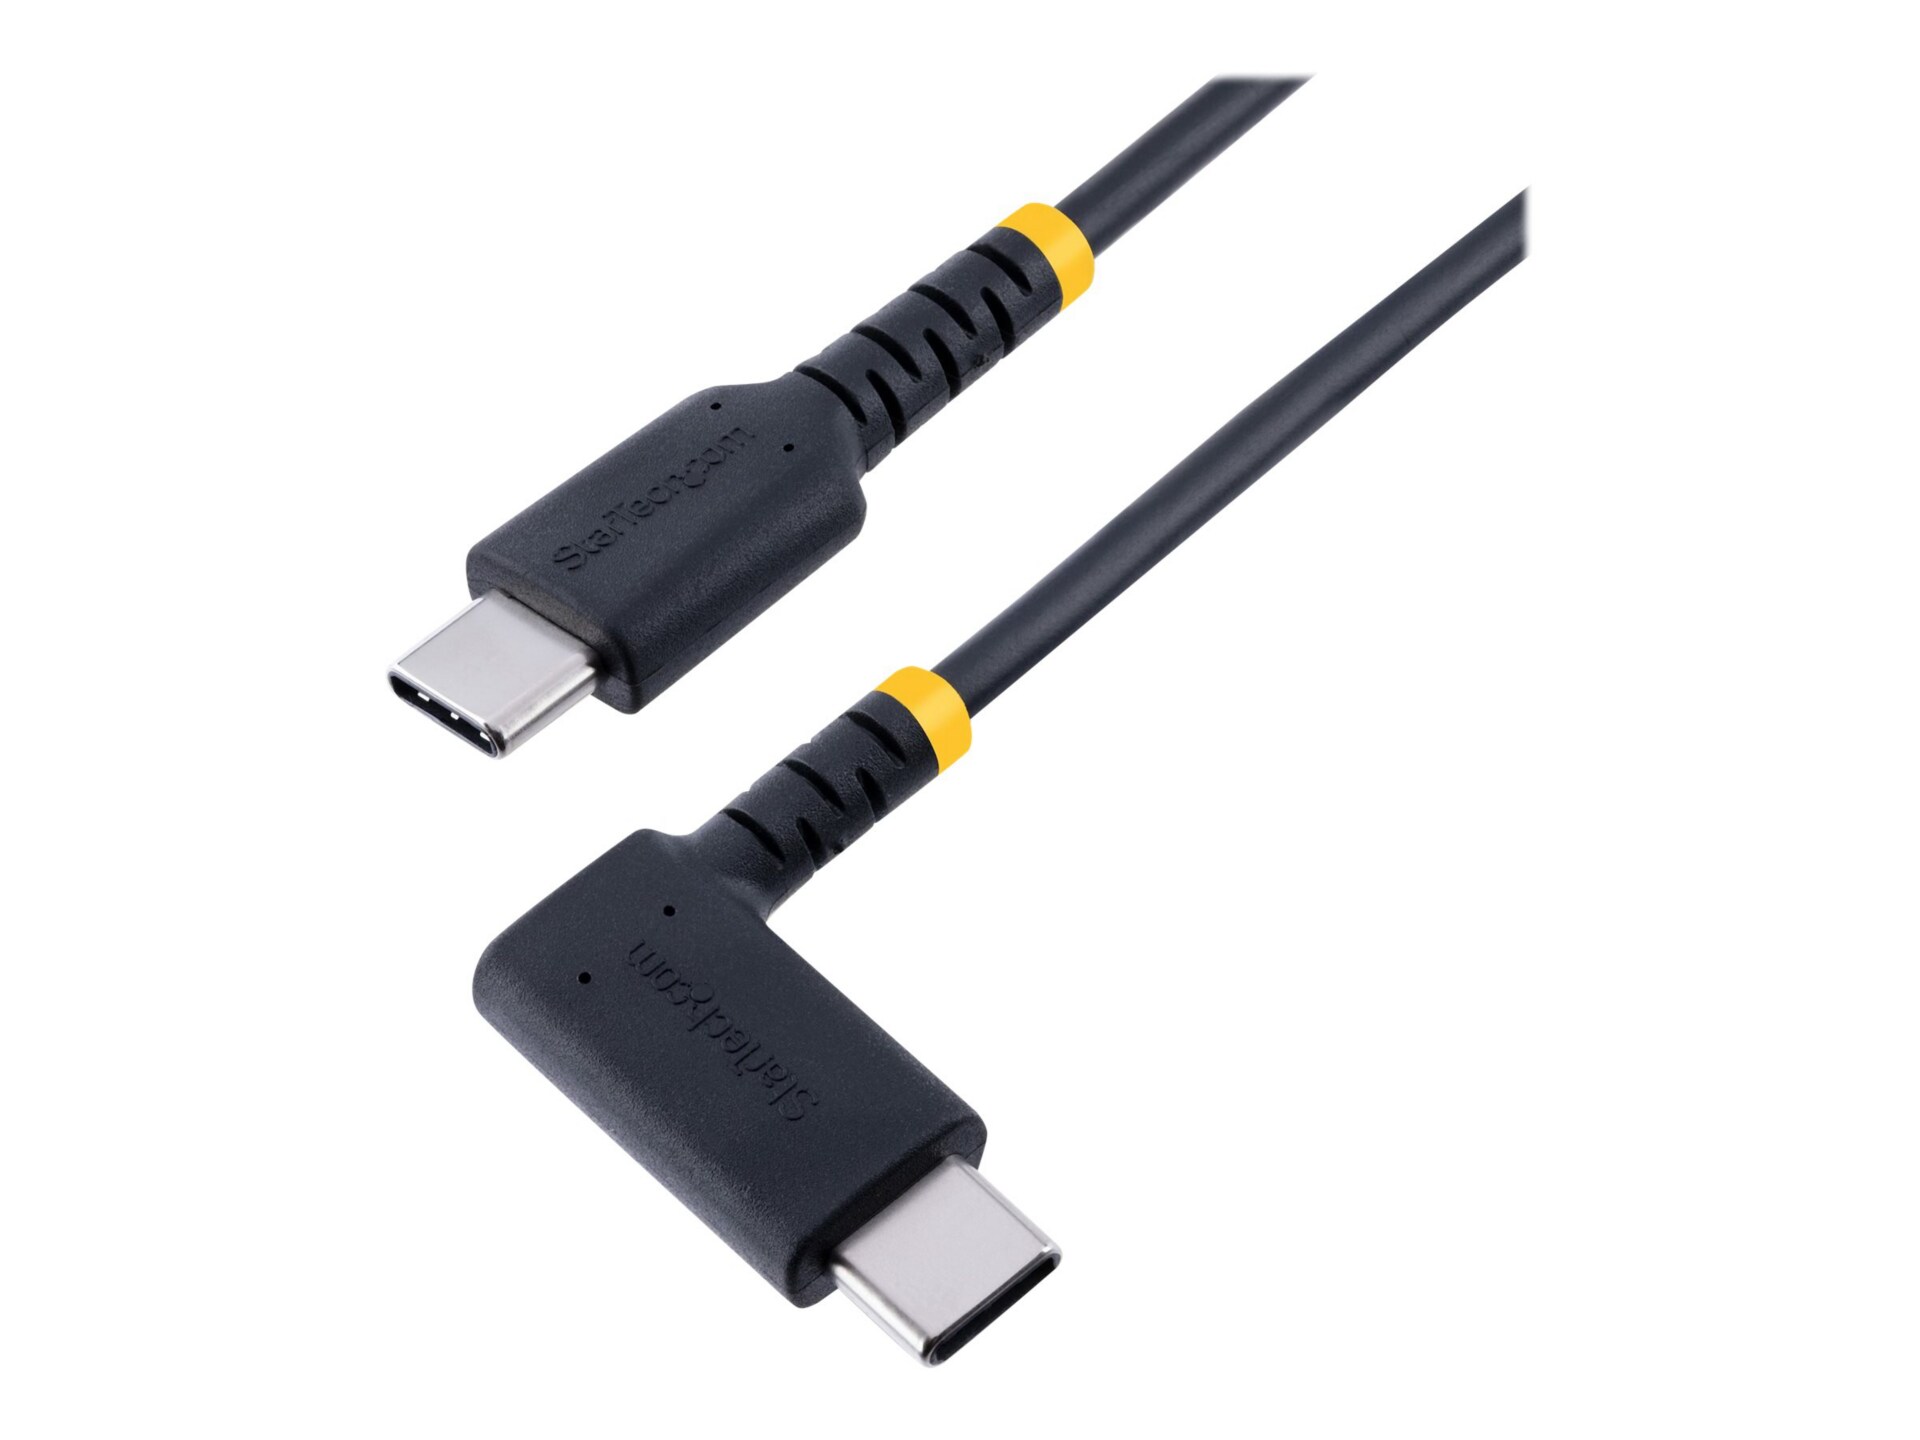 Thunderbolt & USB Cables